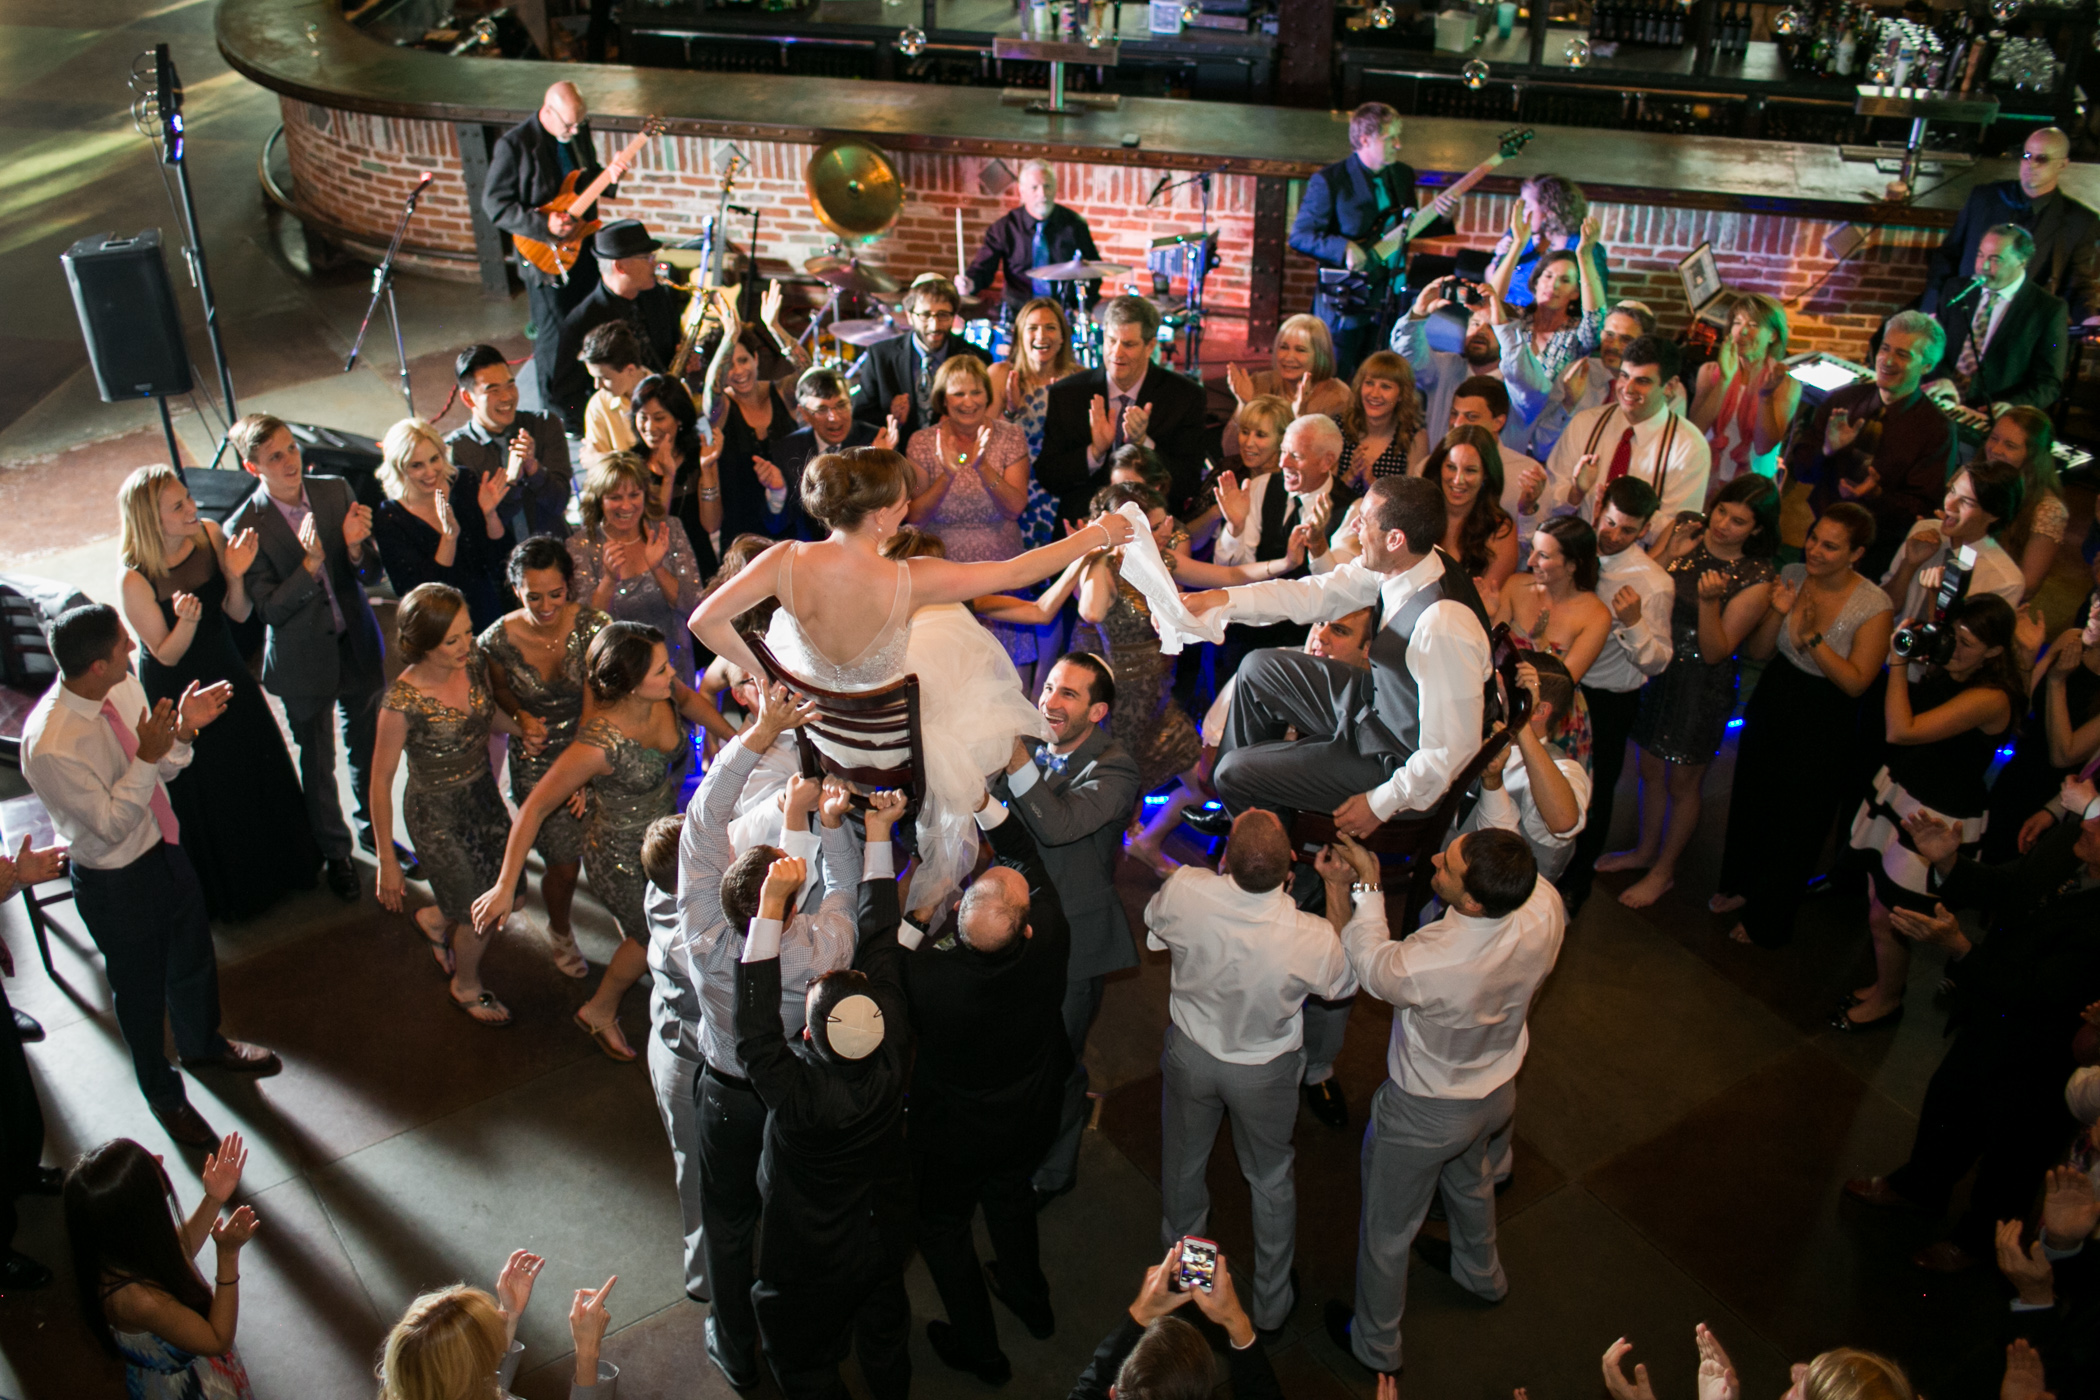 kellylemonphotography_a downtown denver Jewish wedding at Mile High station Photos-84